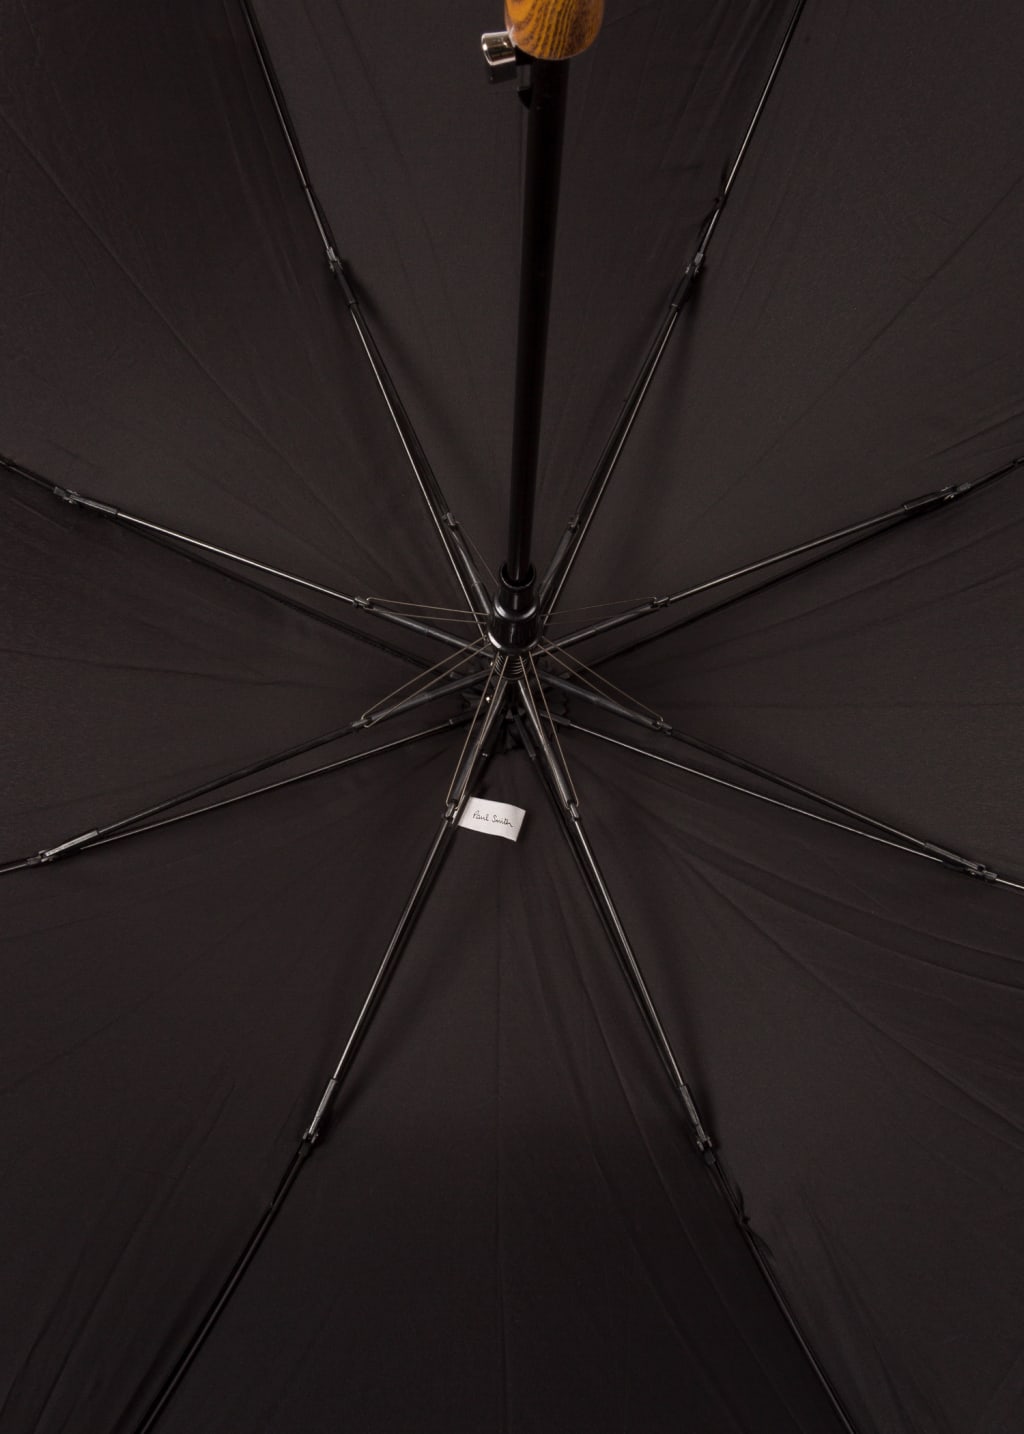 Detail View - Black 'Signature Stripe' Border Walker Umbrella With Wooden Handle Paul Smith